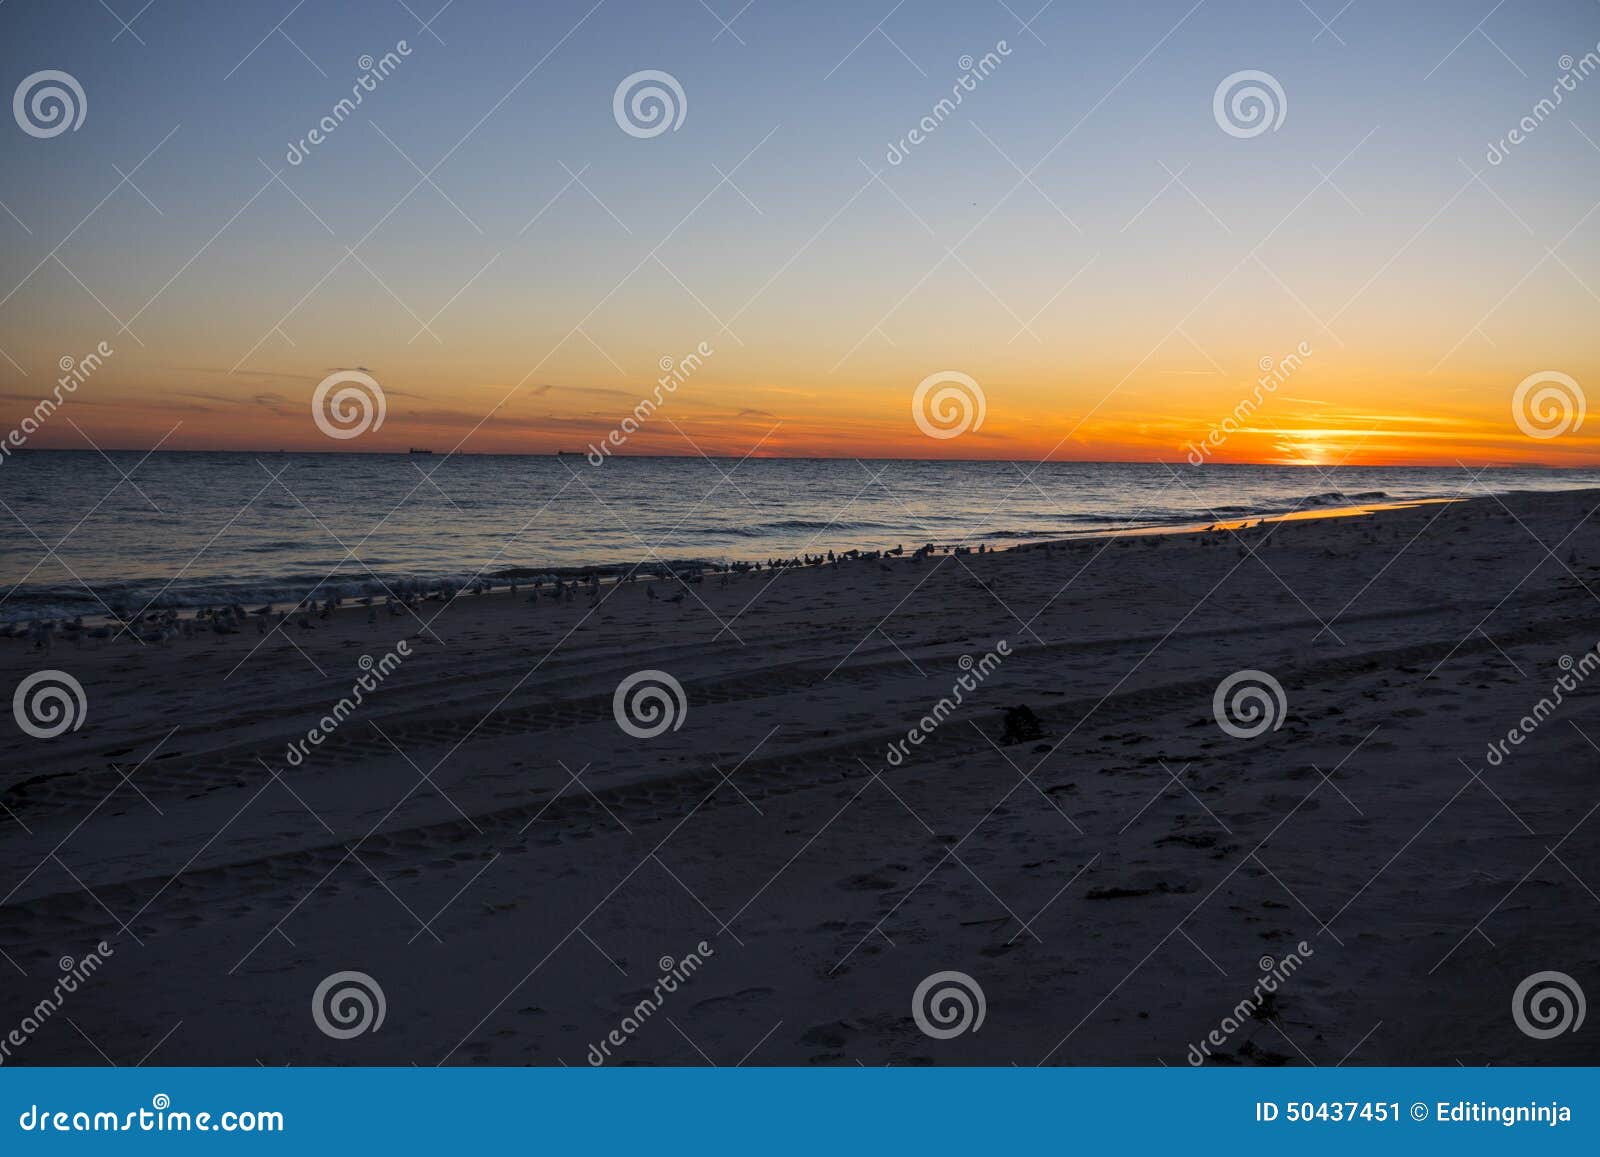 beach sunset 7